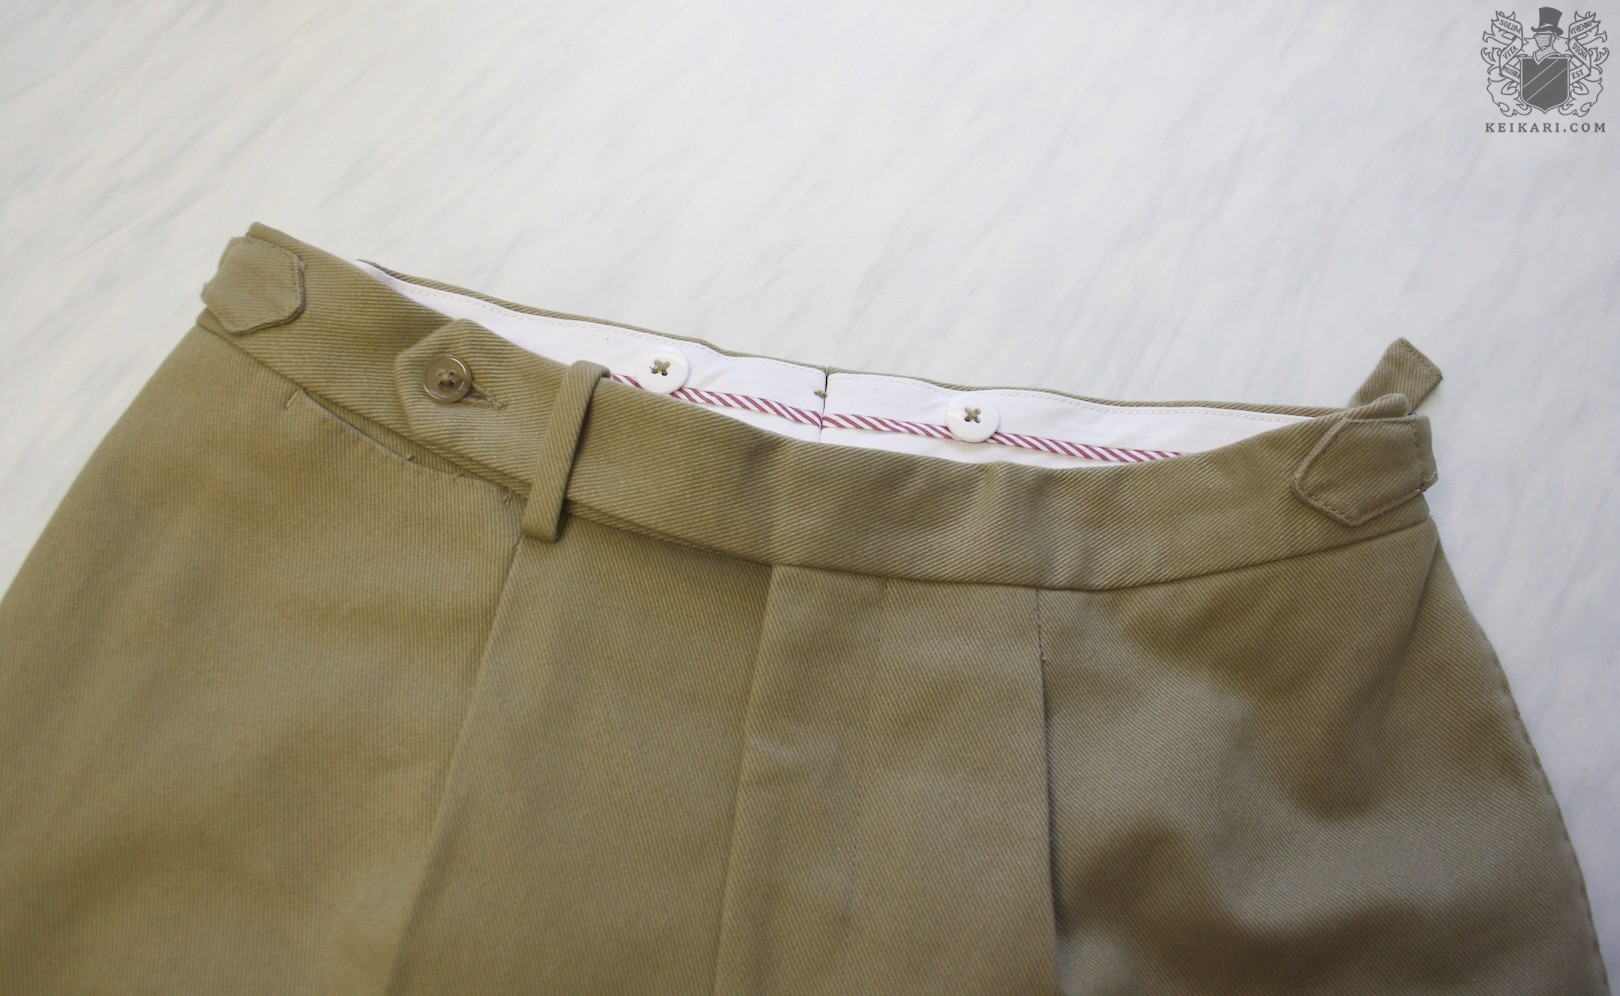 Anatomy of Scavini's Trousers | Keikari.com